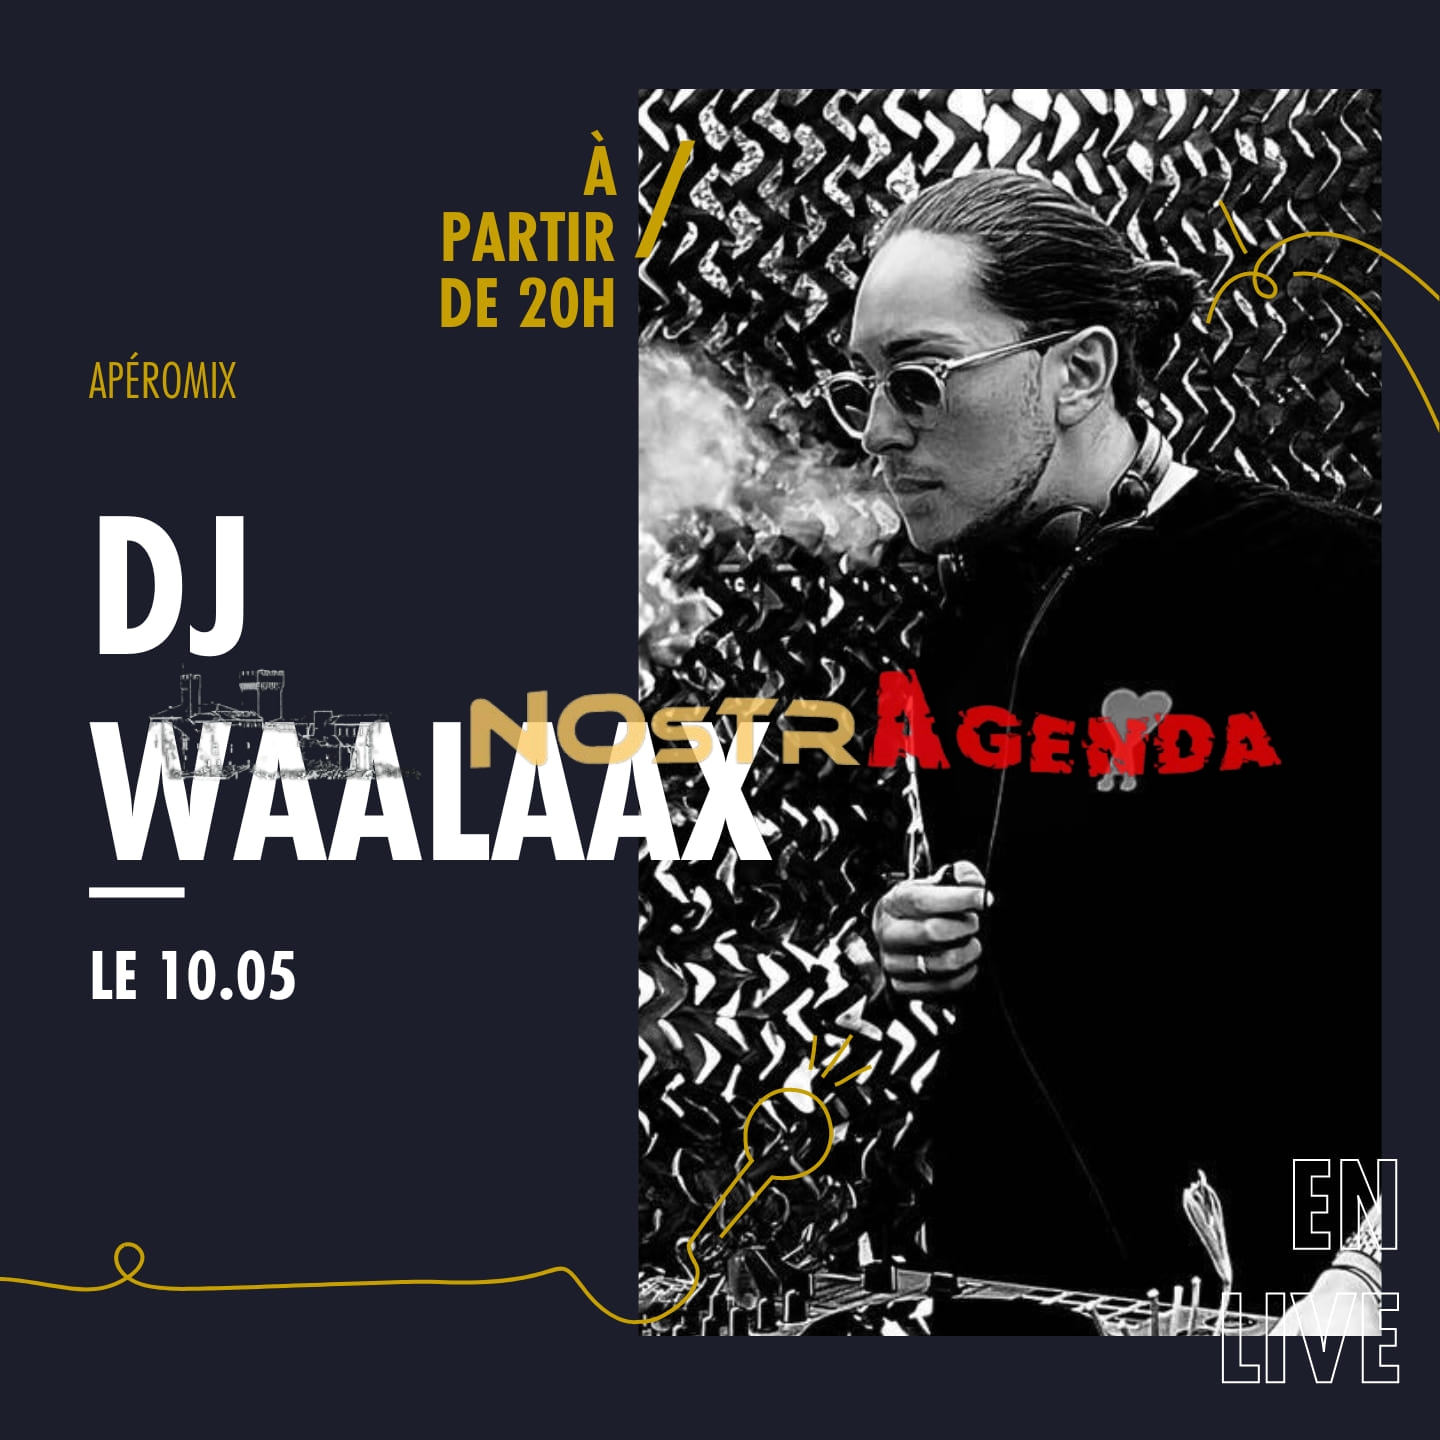 aperomix DJ Waalaax Au Fut Salon agenda soirée Nostragenda sorties Morgan